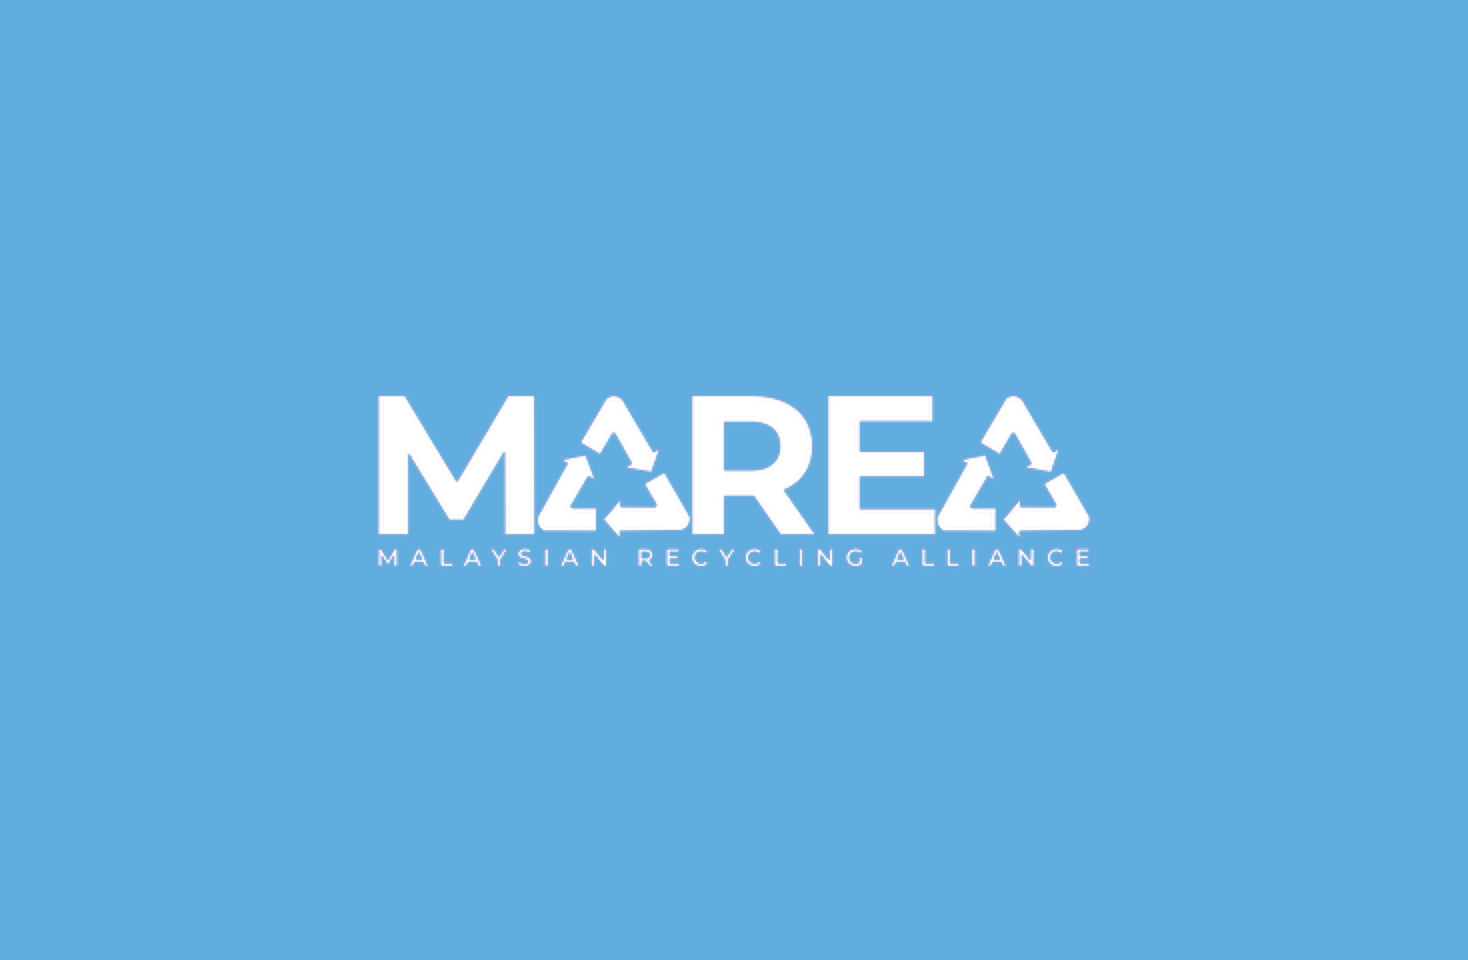 Image of MCC si unisce a MAREA, la Malaysian Recycling Alliance, come collaboratore associato